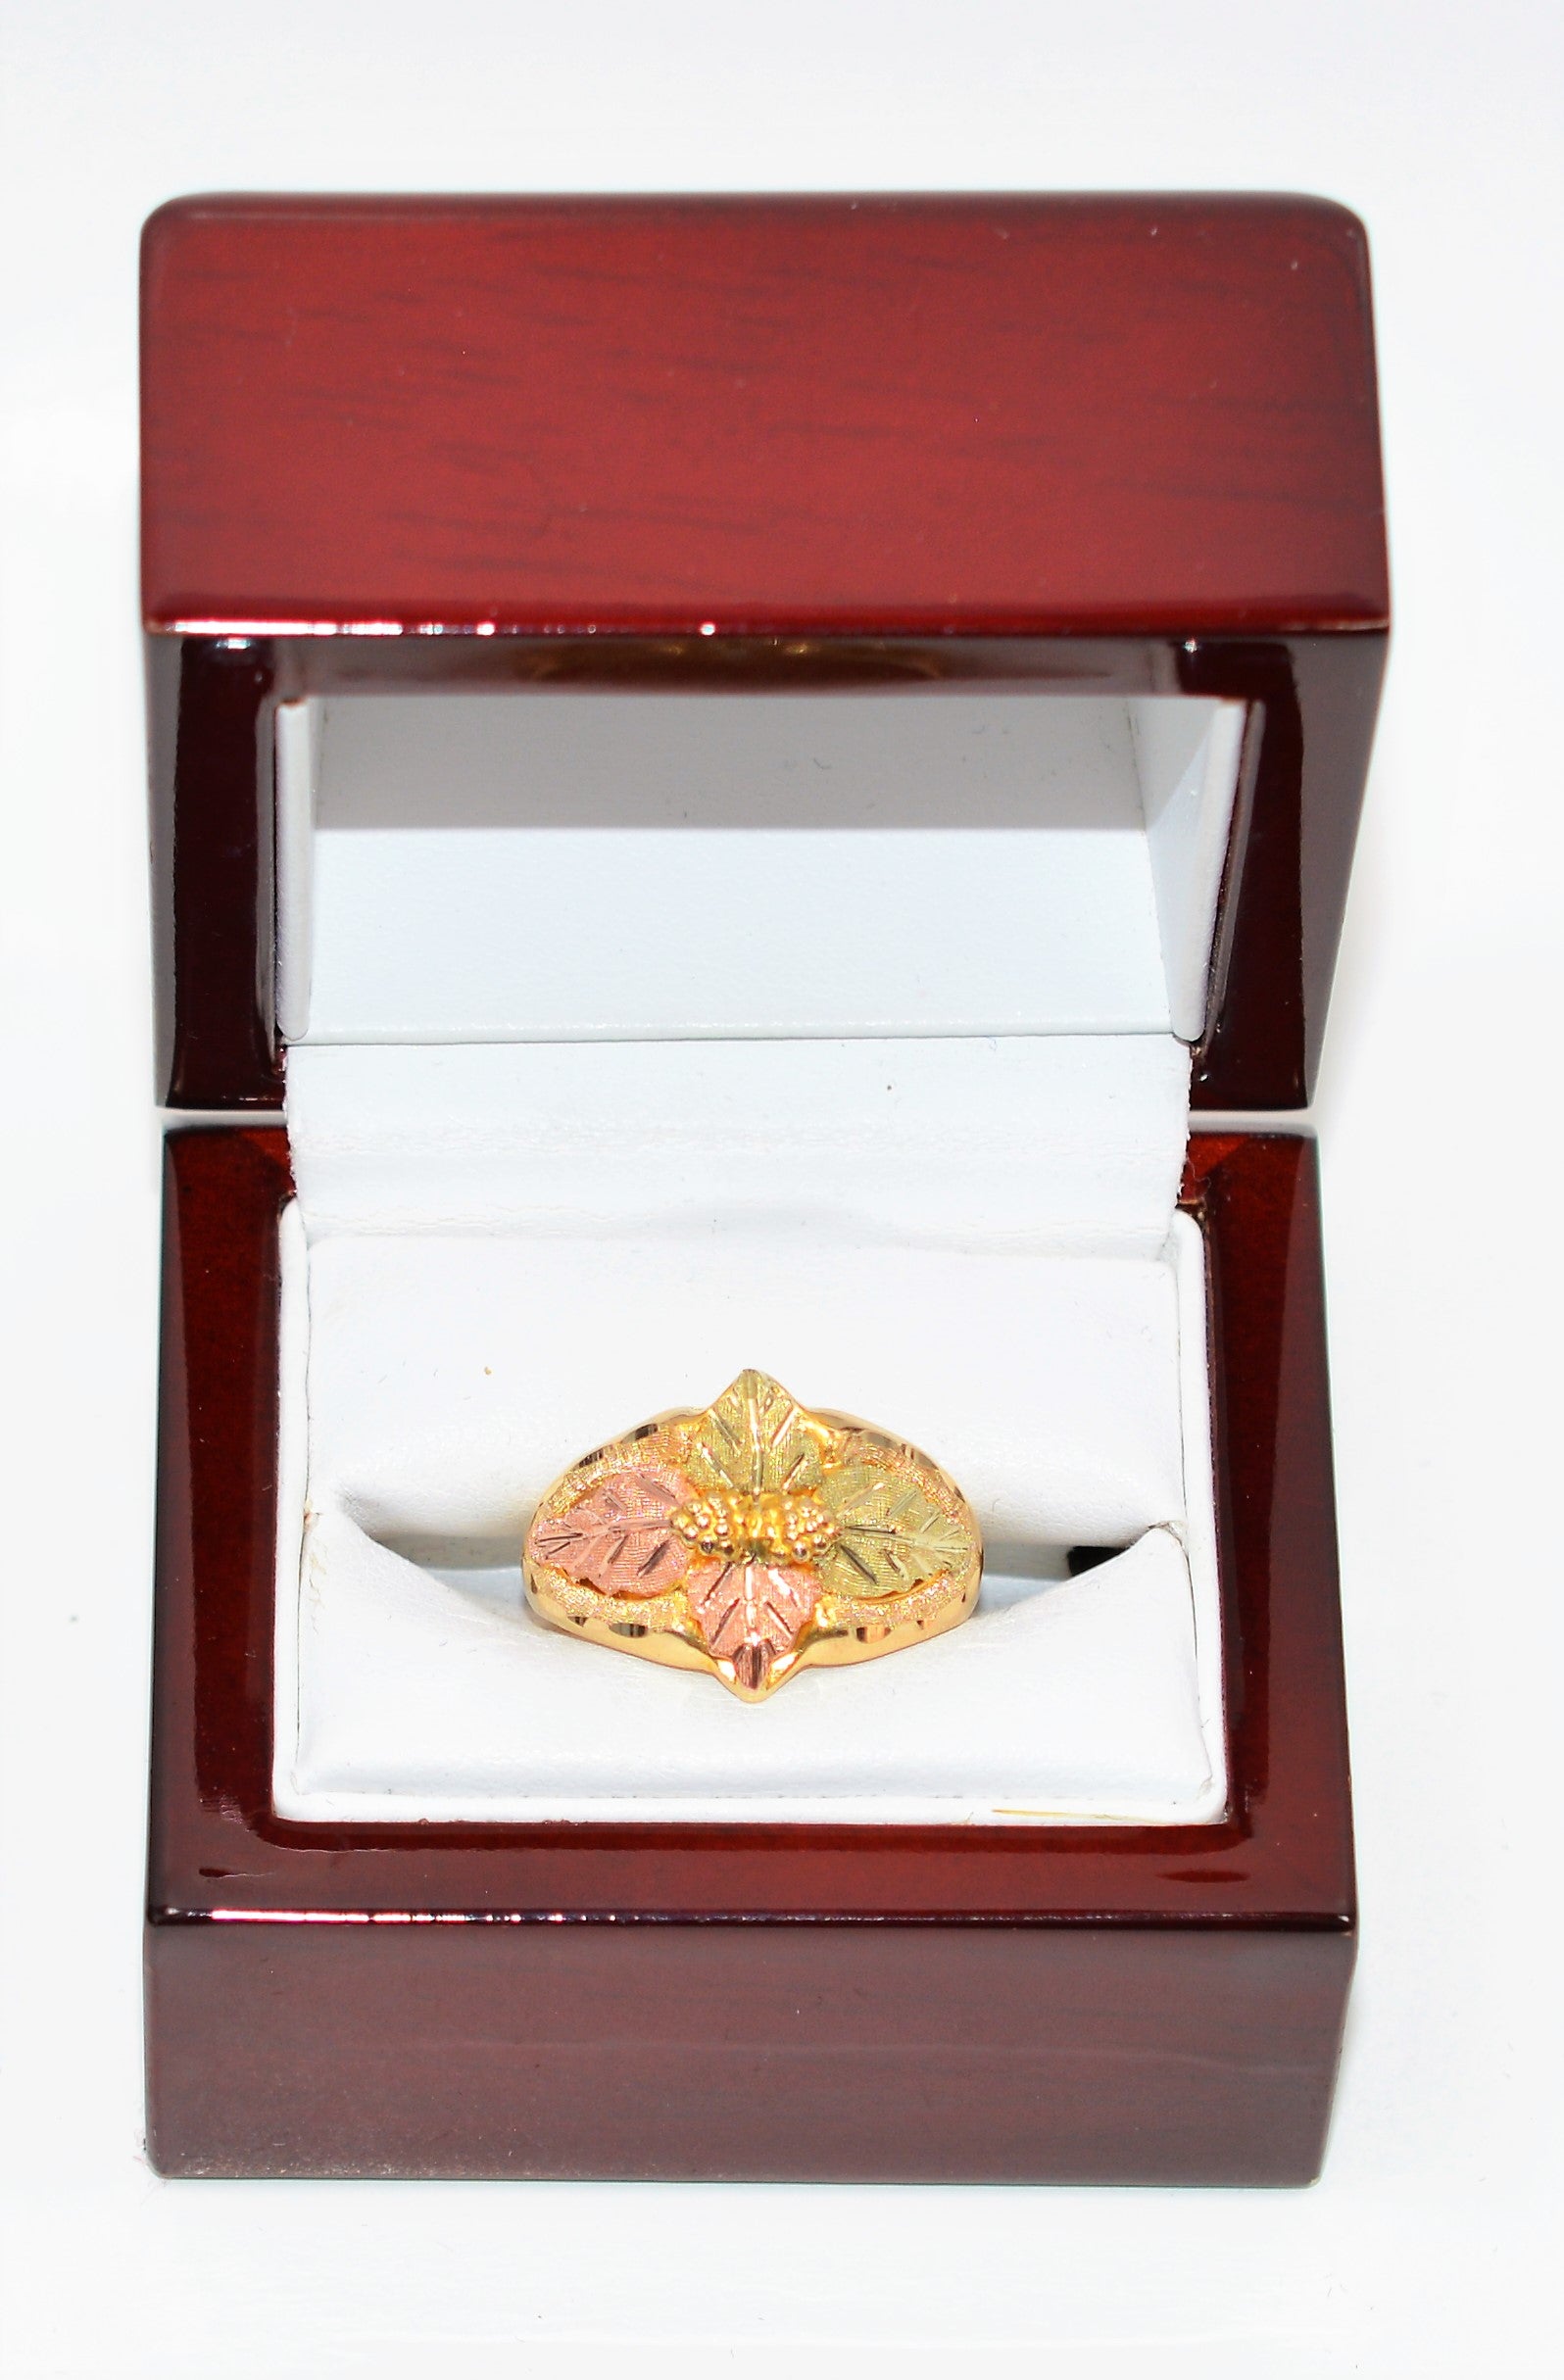 Black Hills Gold Ring 10K Solid Gold Men's Ring Leaf Ring Boho Ring Vine Ring Nature Ring USA Jewelry Statement Ring Black Hills Dakota Gold